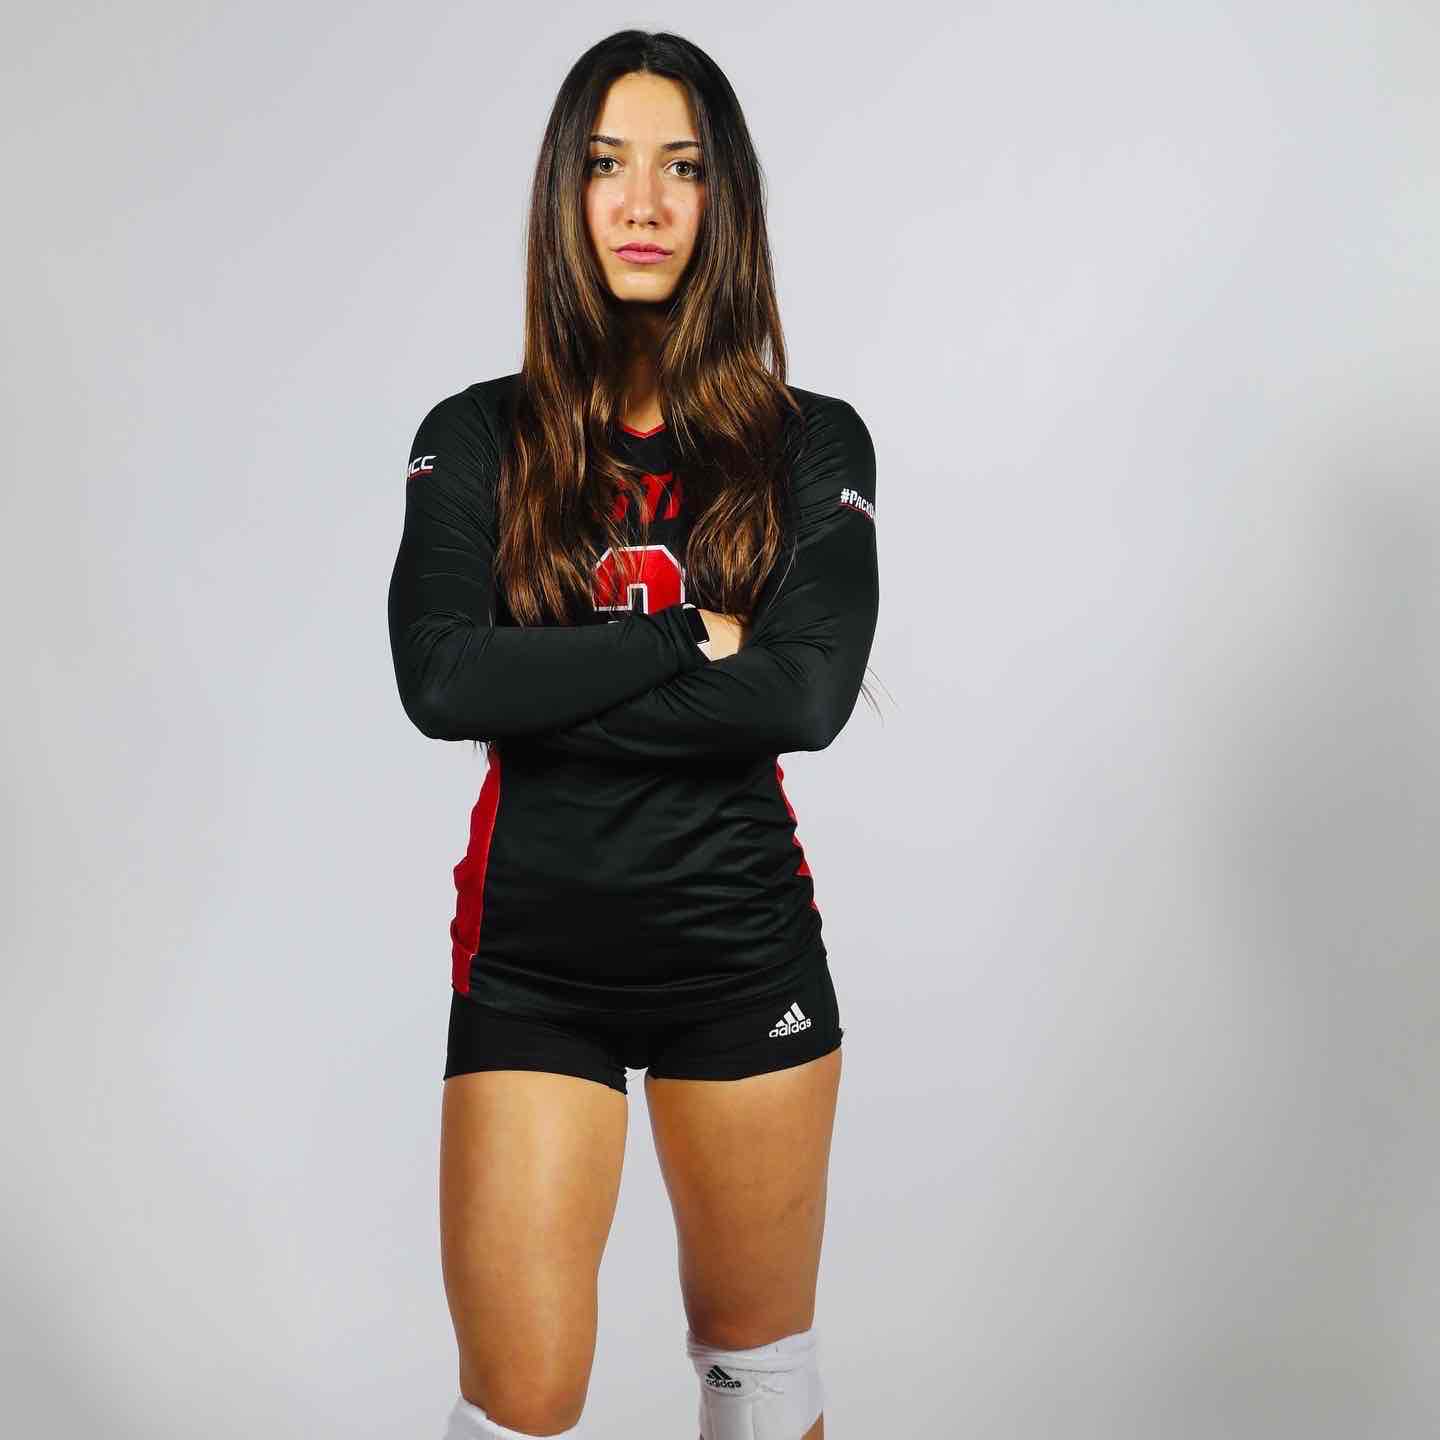 Saskia Hernandez athlete profile head shot